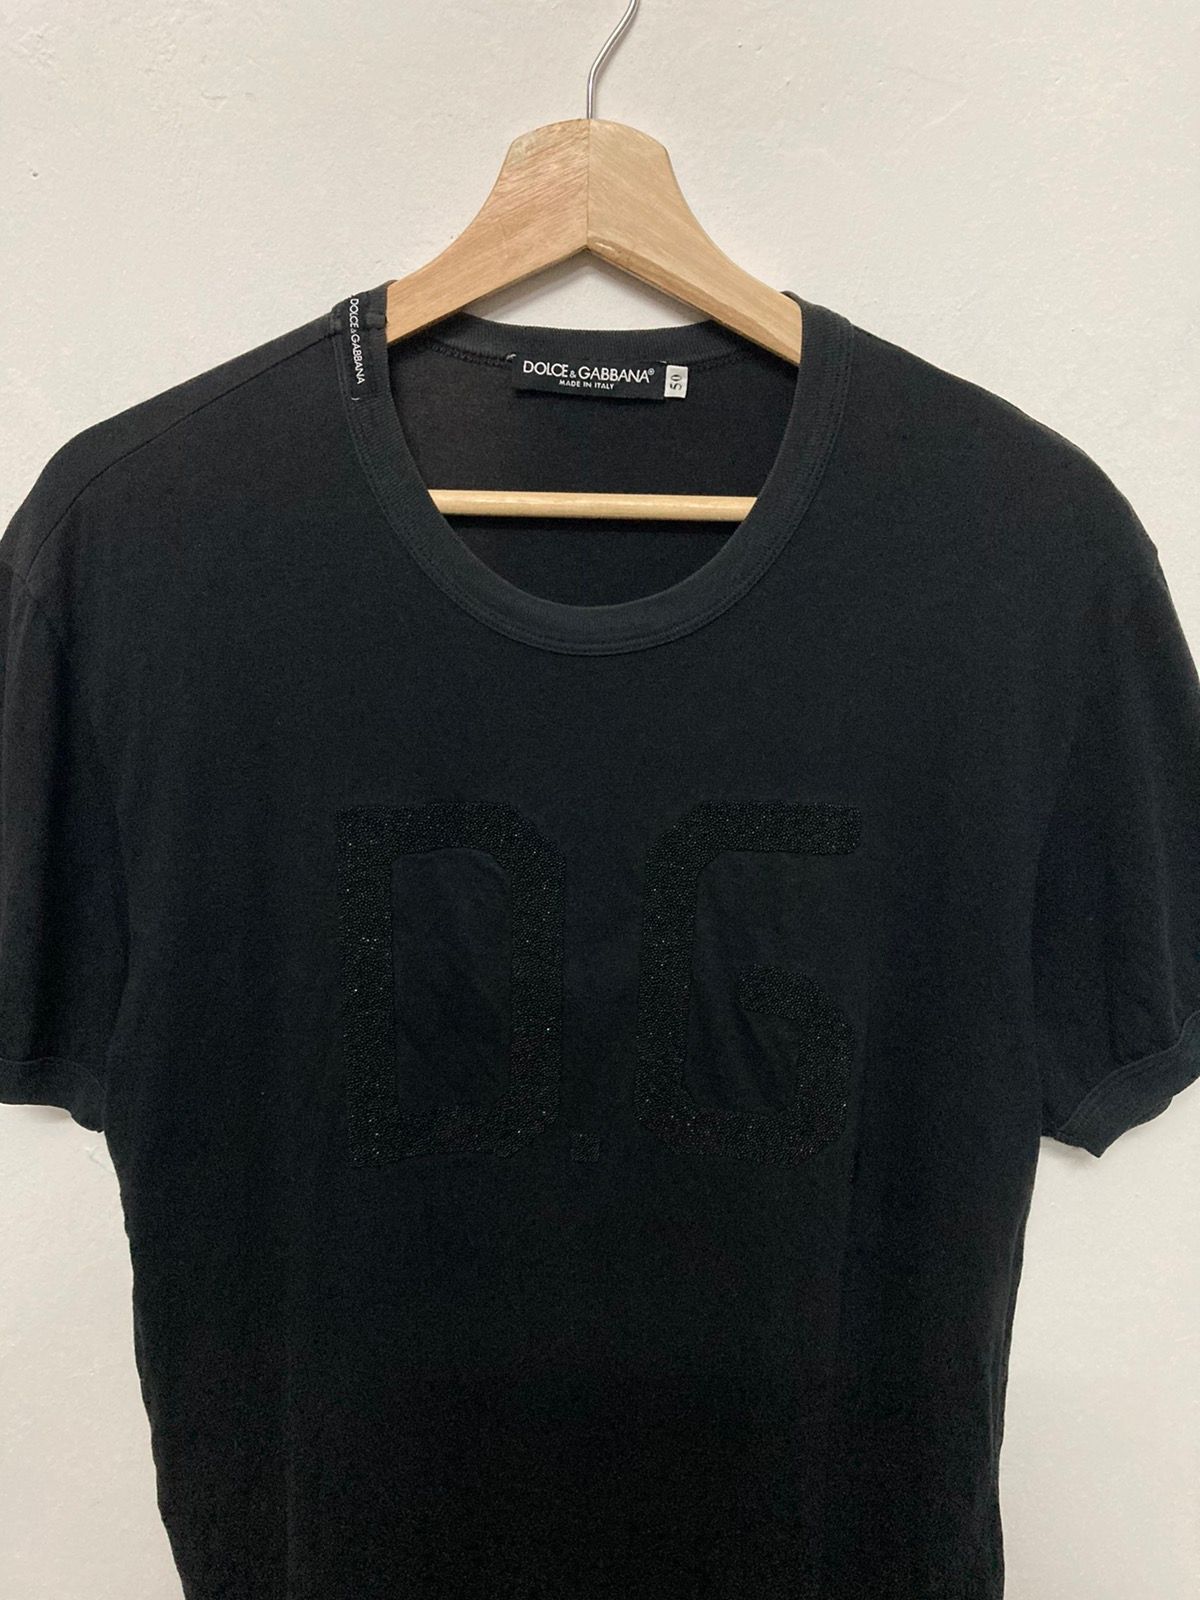 Dolce & Gabbana Big Logo Ringer T shirt - 4